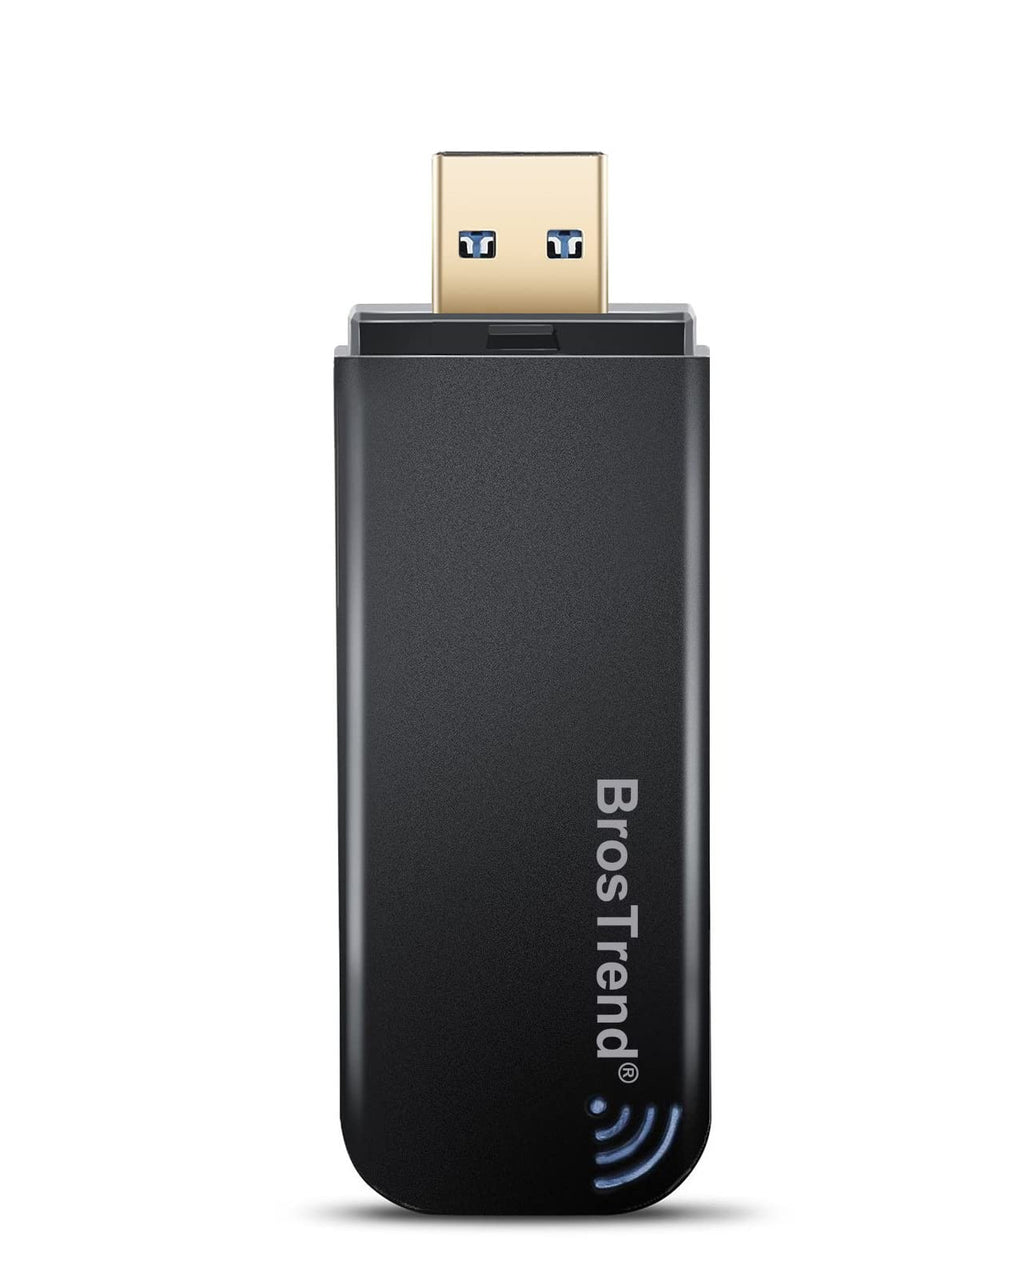  [AUSTRALIA] - BrosTrend 1200Mbps USB WiFi Network Adapter for Laptop, Desktop PC of Windows 11/10/8/7, USB 3.0, Wireless Adaptador AC1200 Dual Band 5GHz/2.4GHz